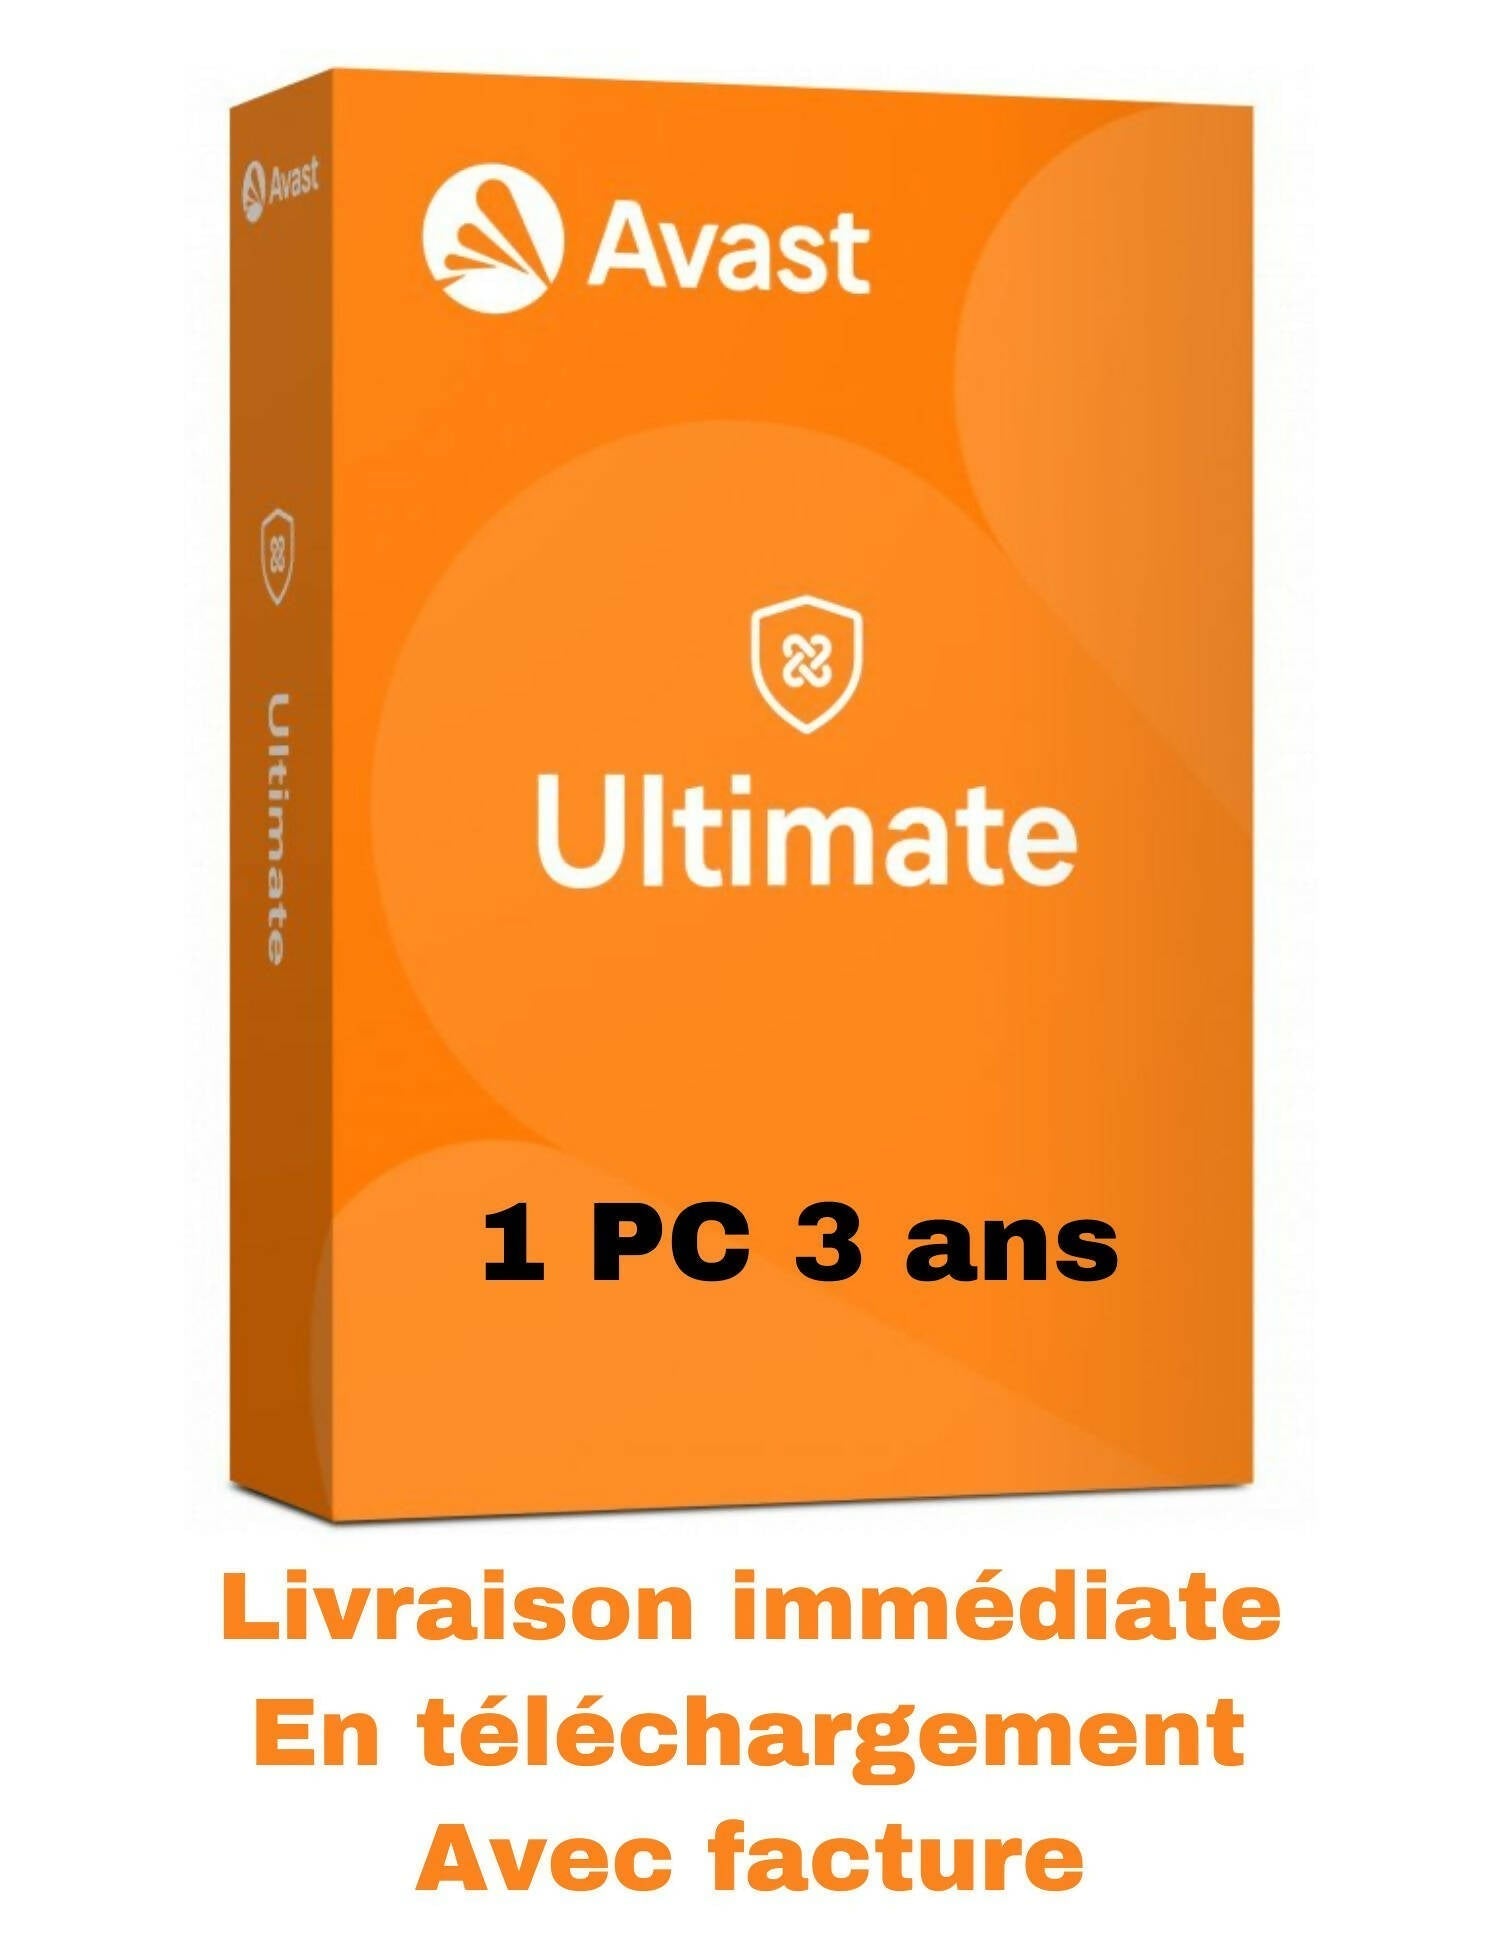 Avast Ultimate 1 PC 3 ans clicktofournisseur.com